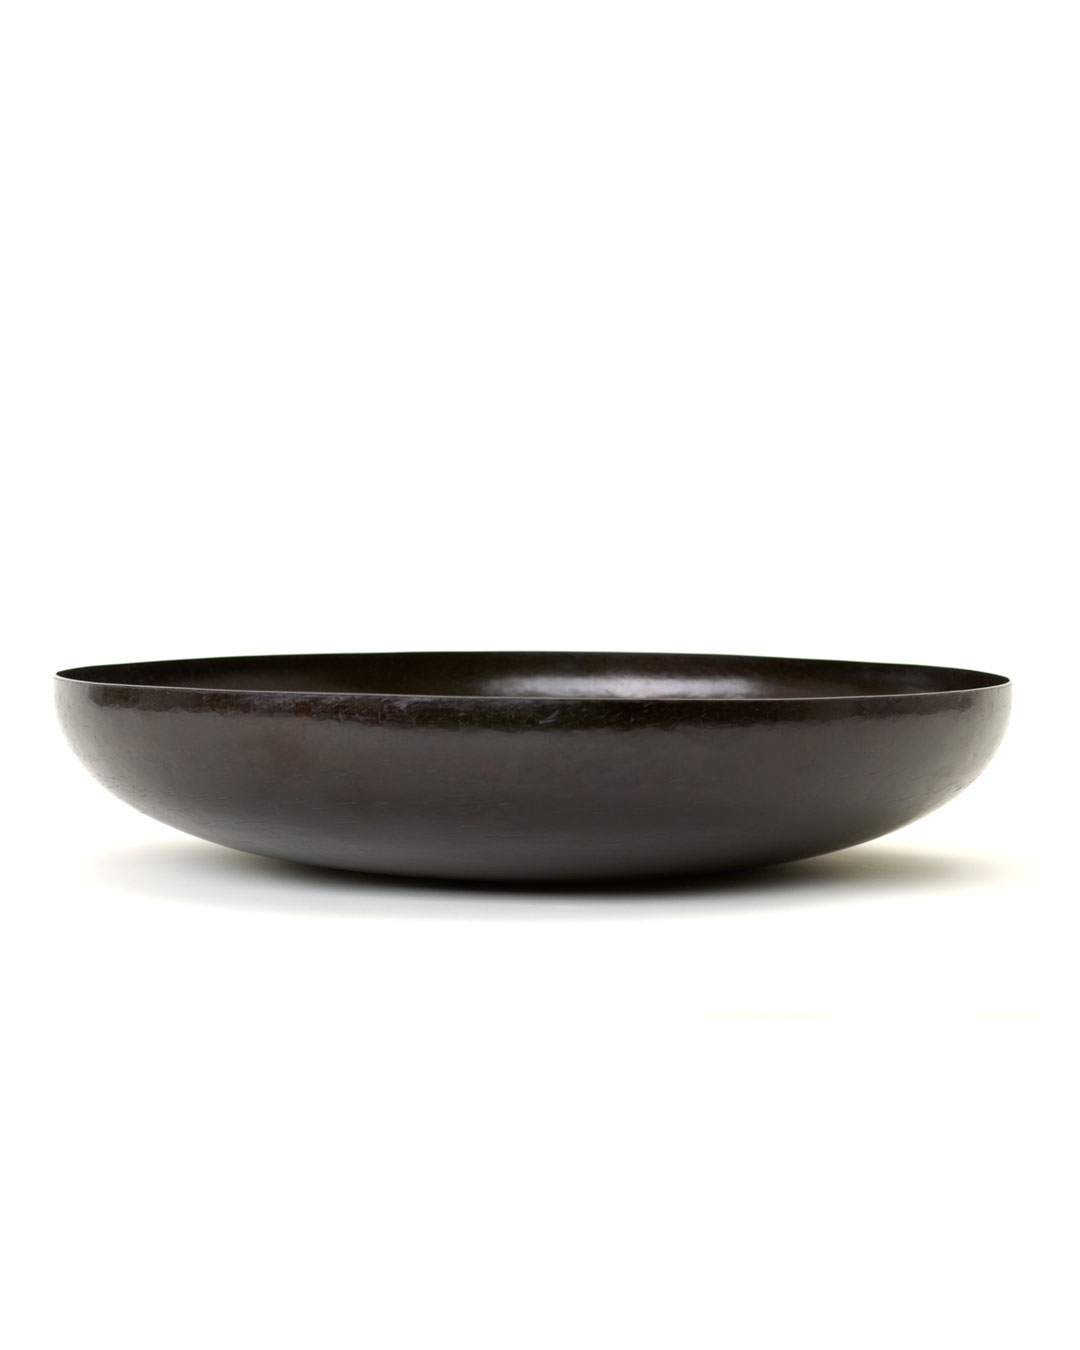 Tore Svensson, untitled, 2006, bowl; iron, 80 x ø 350 mm, €3500